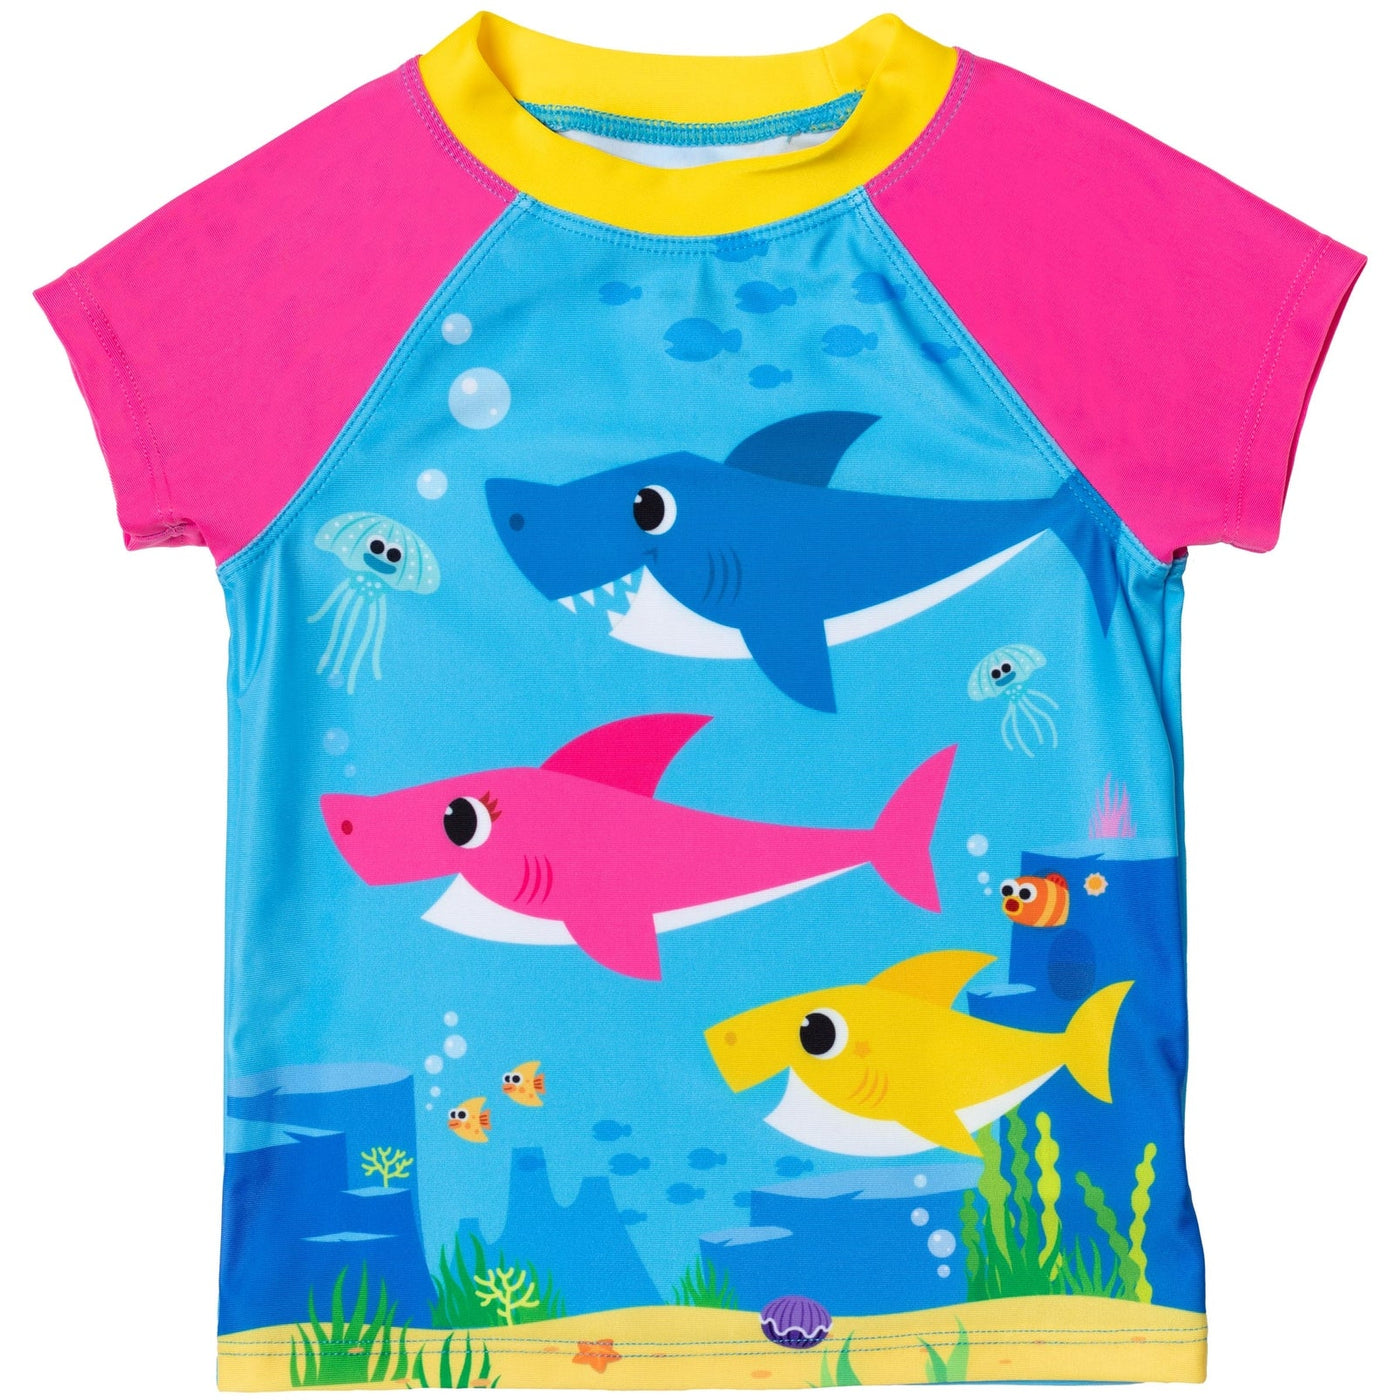 Baby Shark Rash Guard Tankini Top and Bikini Bottom 3 Piece Swimsuit Set - imagikids